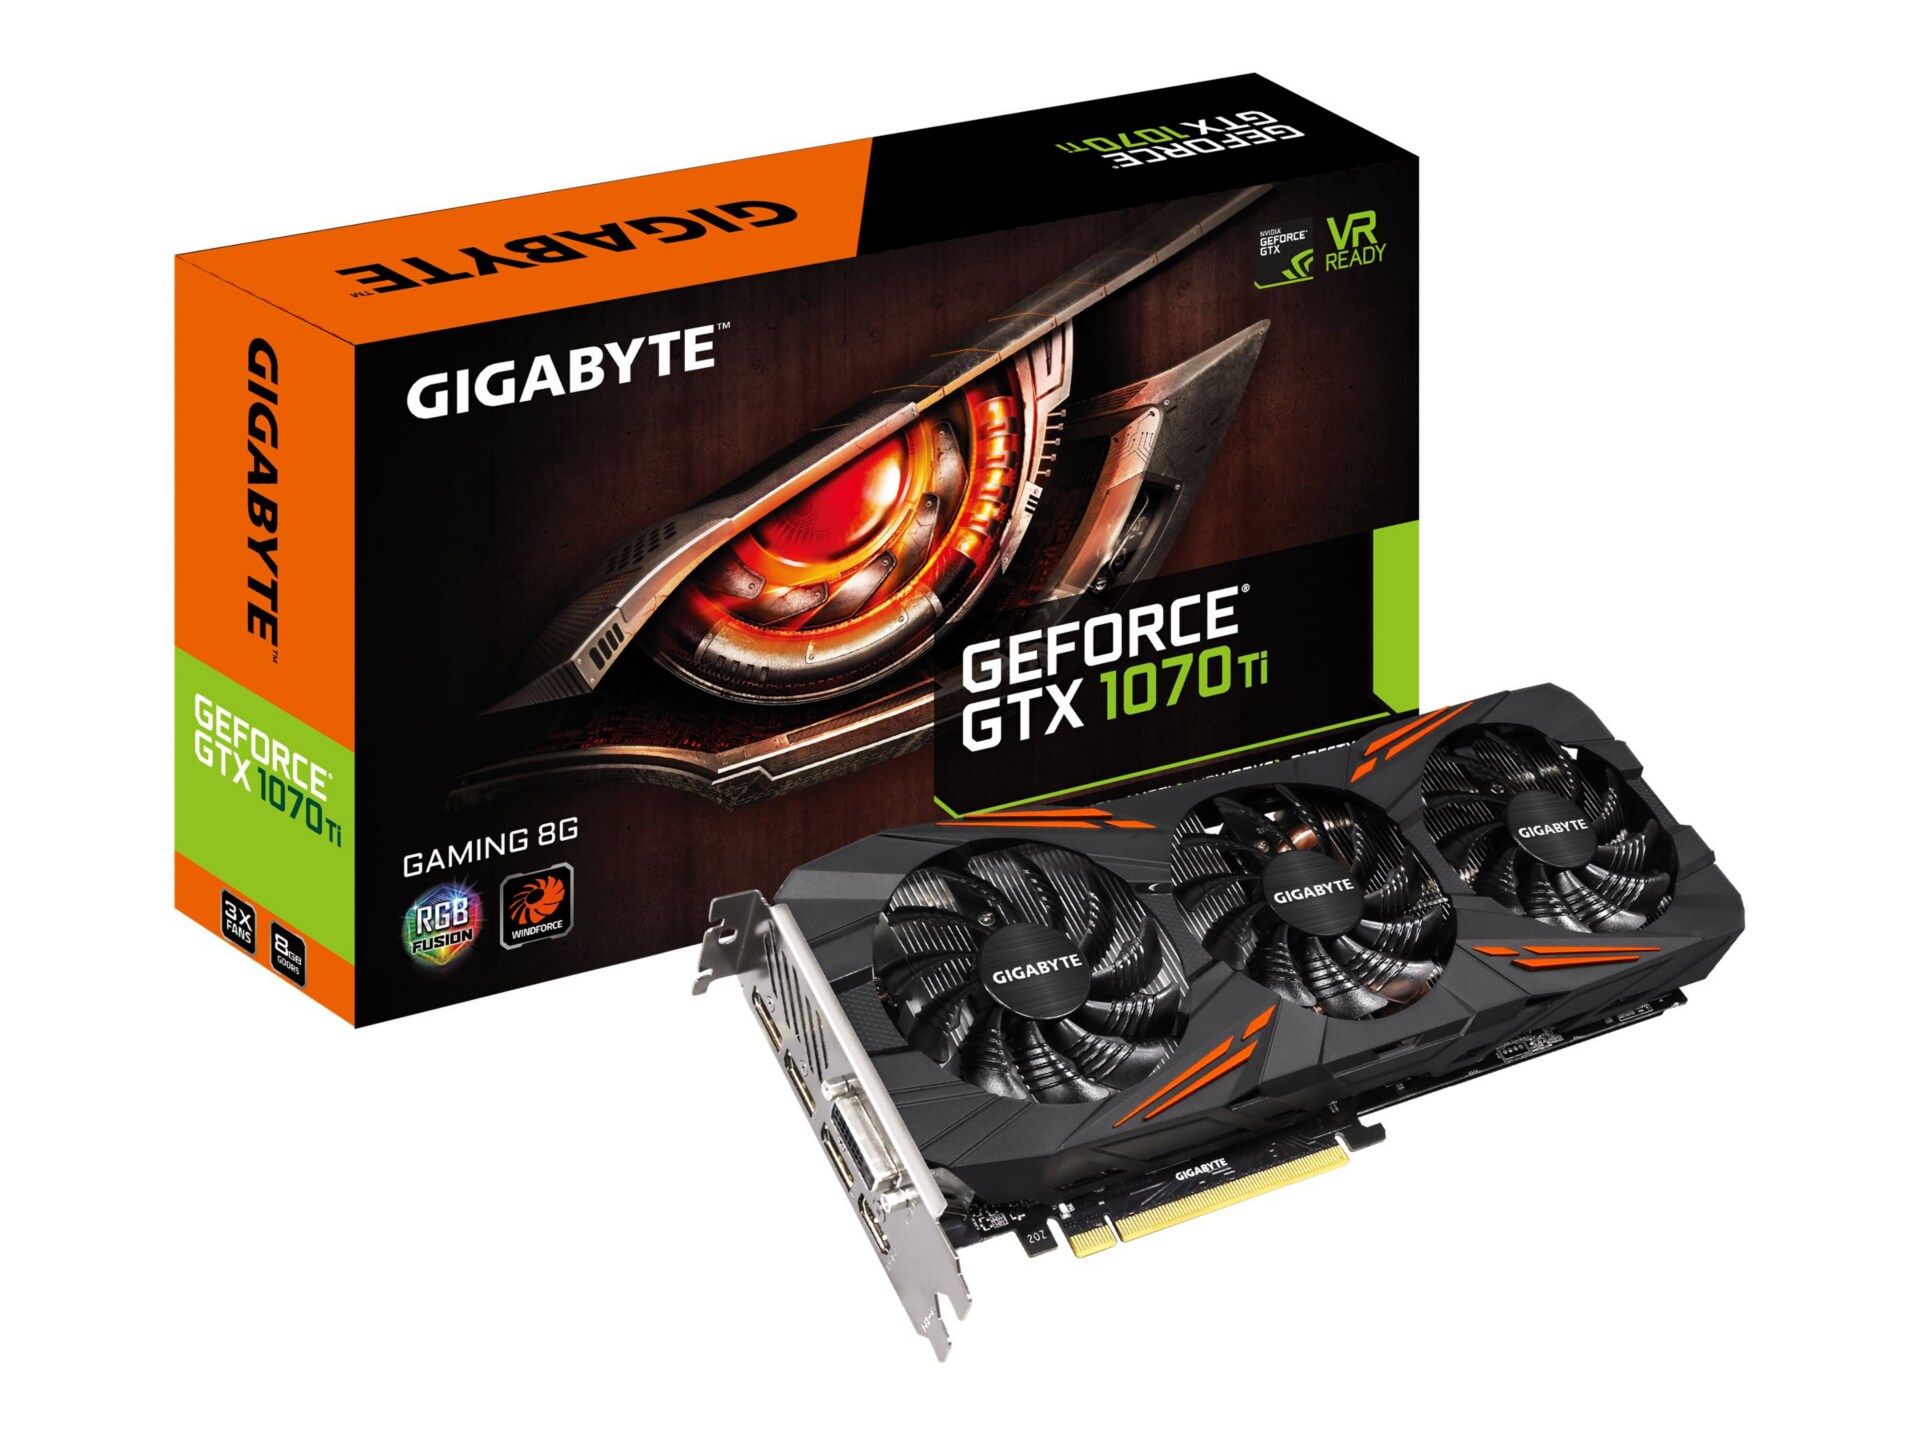 Gigabyte GeForce GTX 1070 Ti Gaming 8G - graphics card - GF GTX 1070 Ti - 8 GB